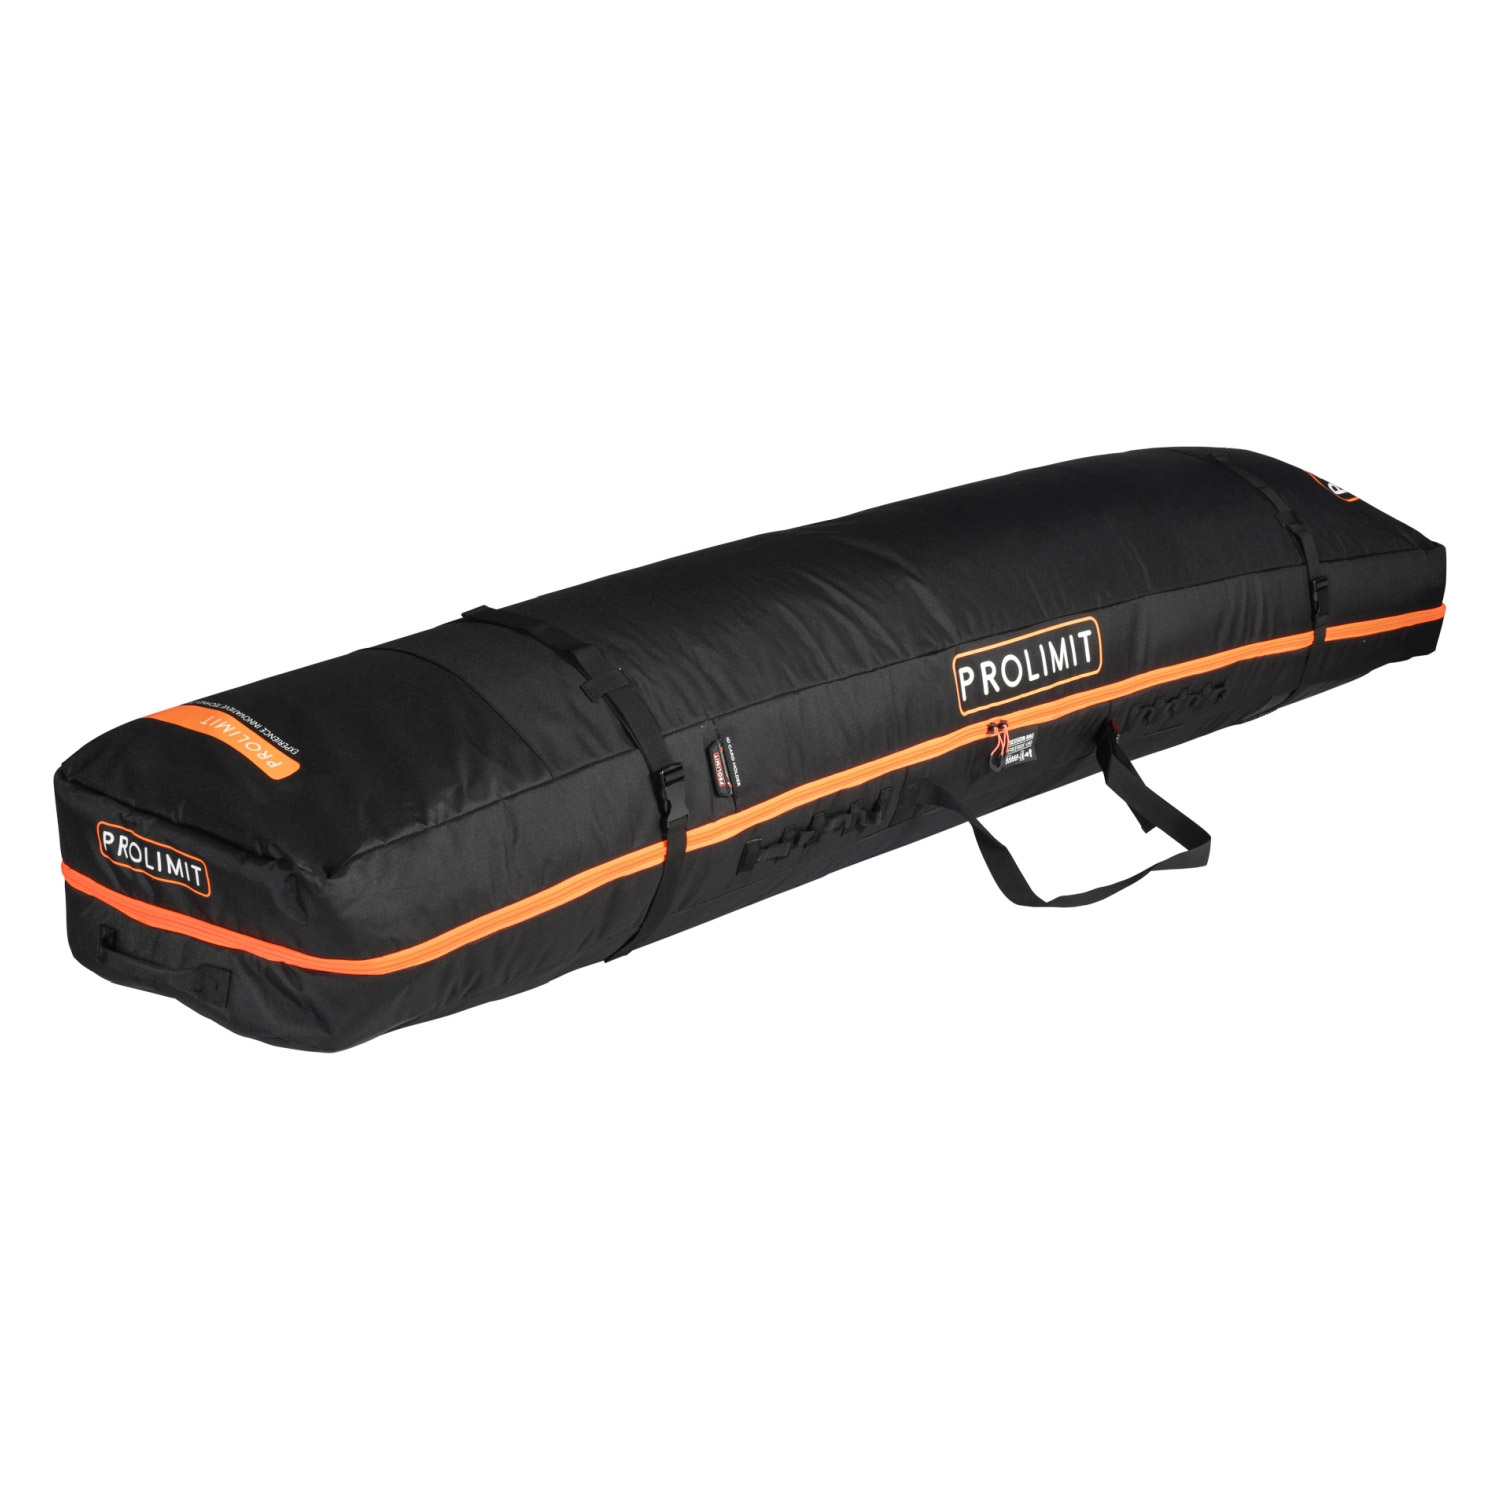 Pro Limit Windsurf Session-Boardbag All in One Windsurf Equipment Bag 600D 